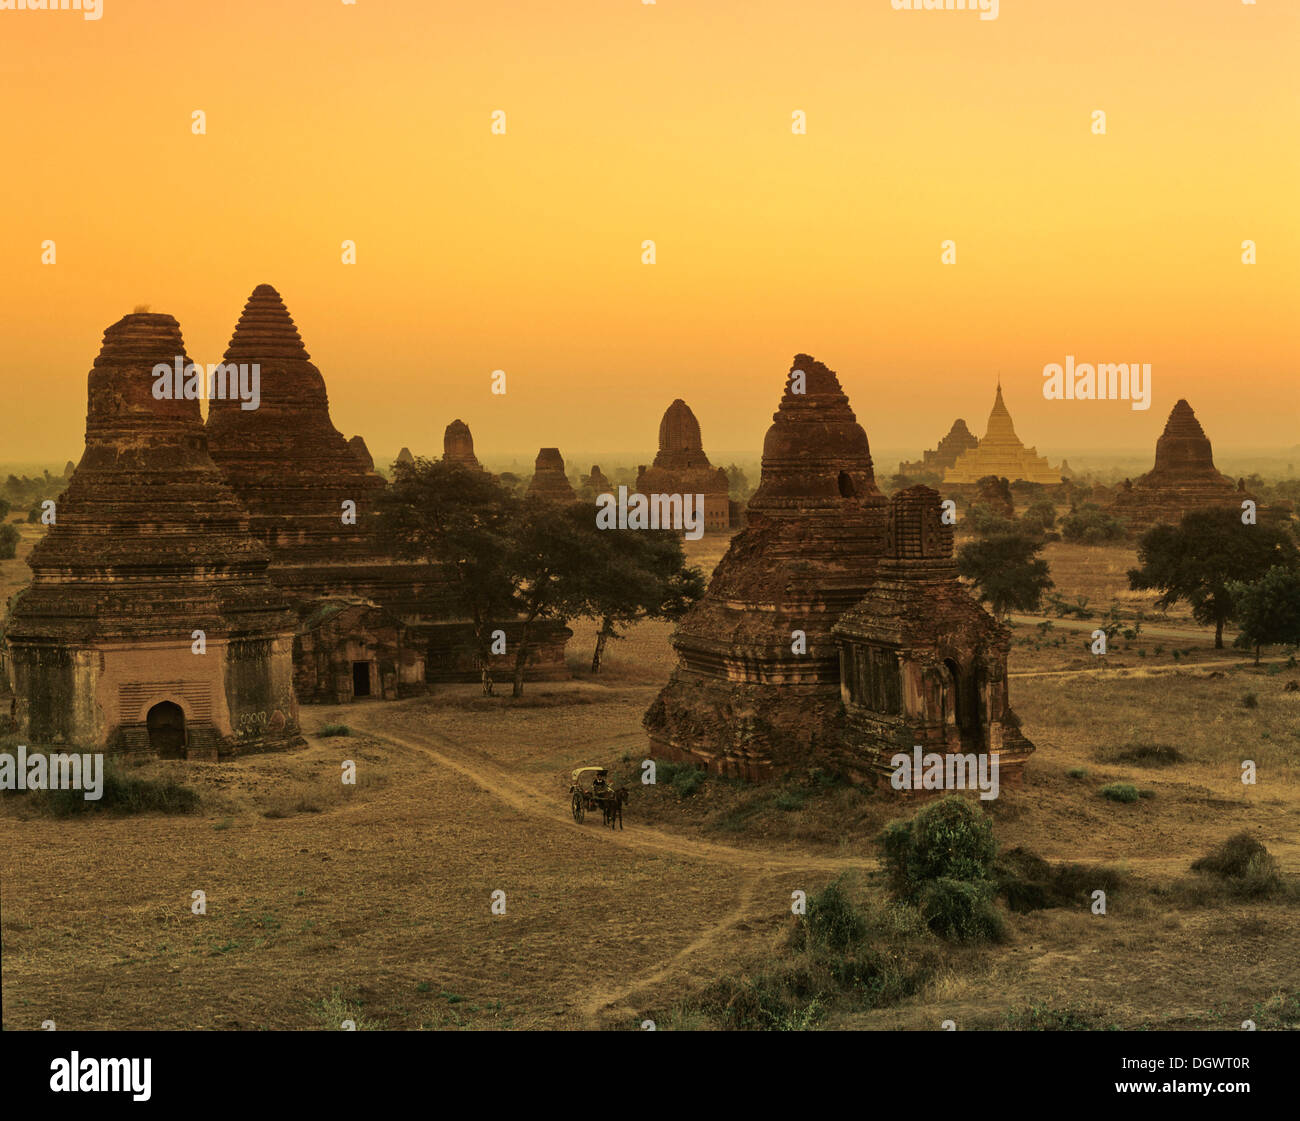 Field with ruins of Buddhist pagodas and temples, Ebene von Pagan, Bagan, Mandalay Division, Myanmar, Burma Stock Photo